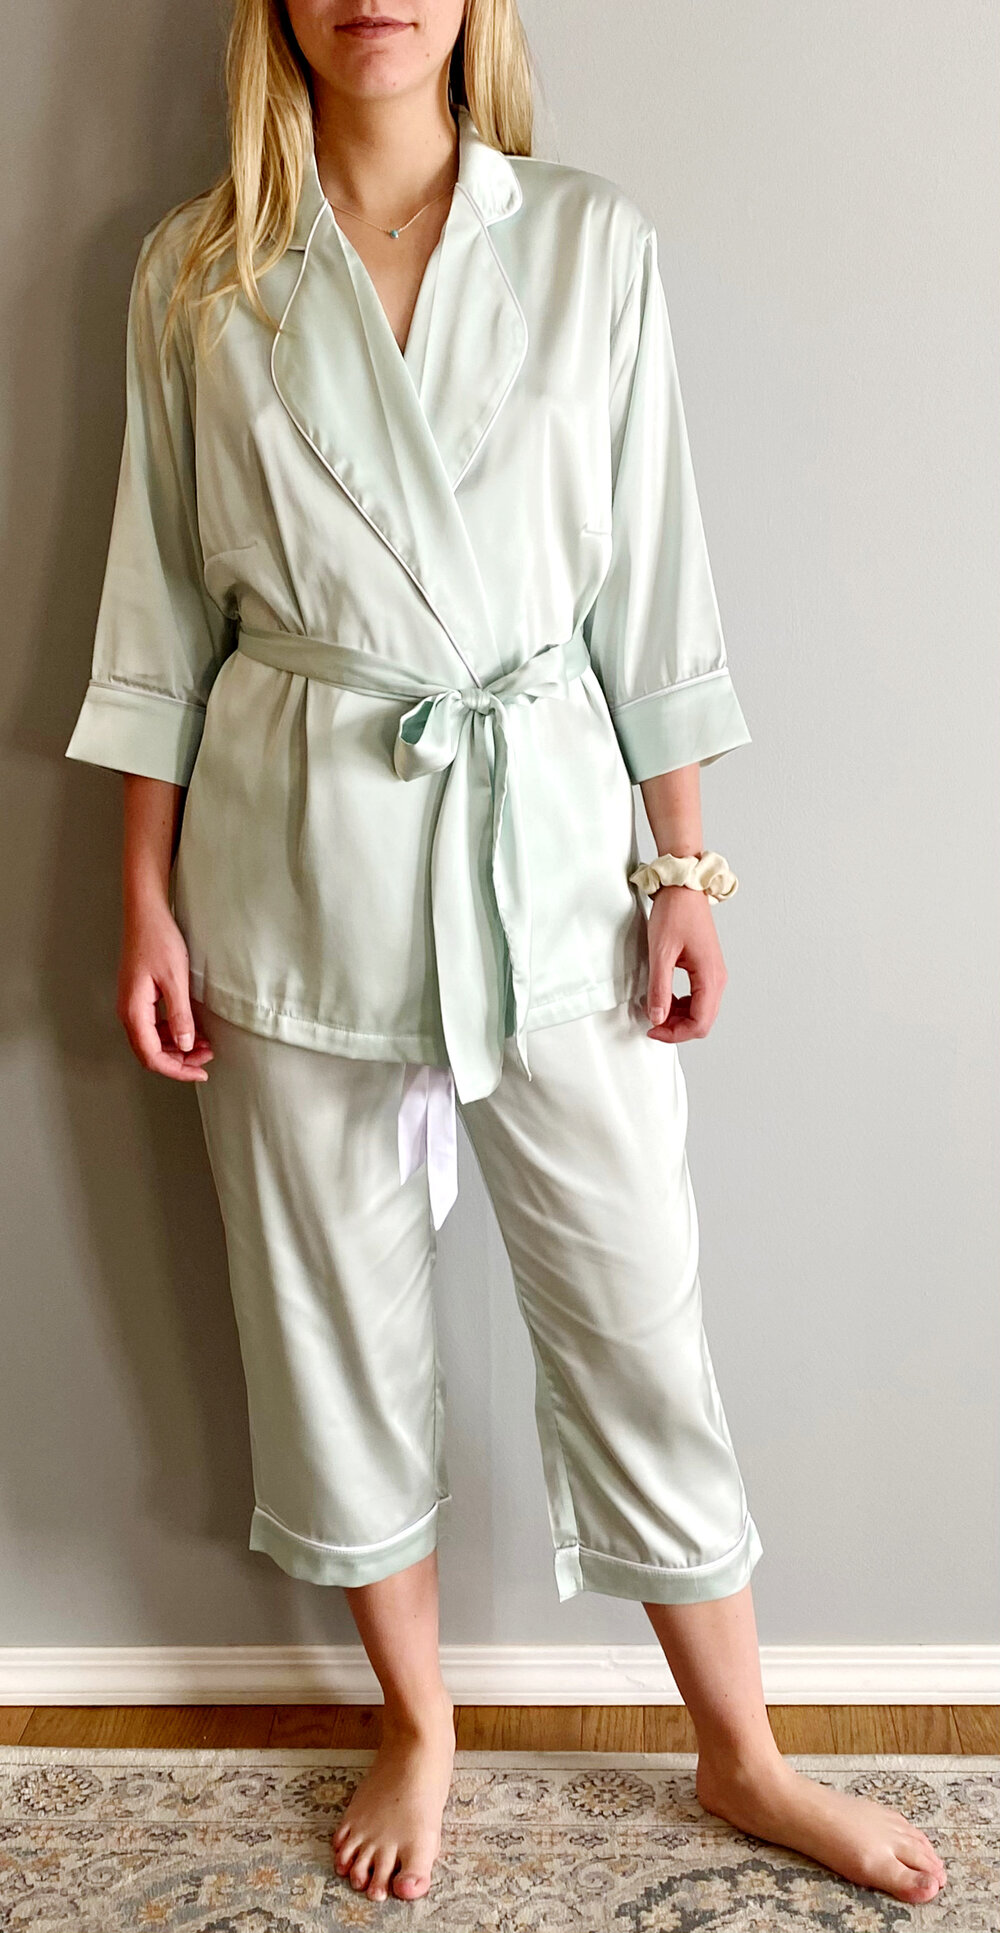 Women's Sleepwear Silky Soft Satin Women Top & Capri Pajama Set